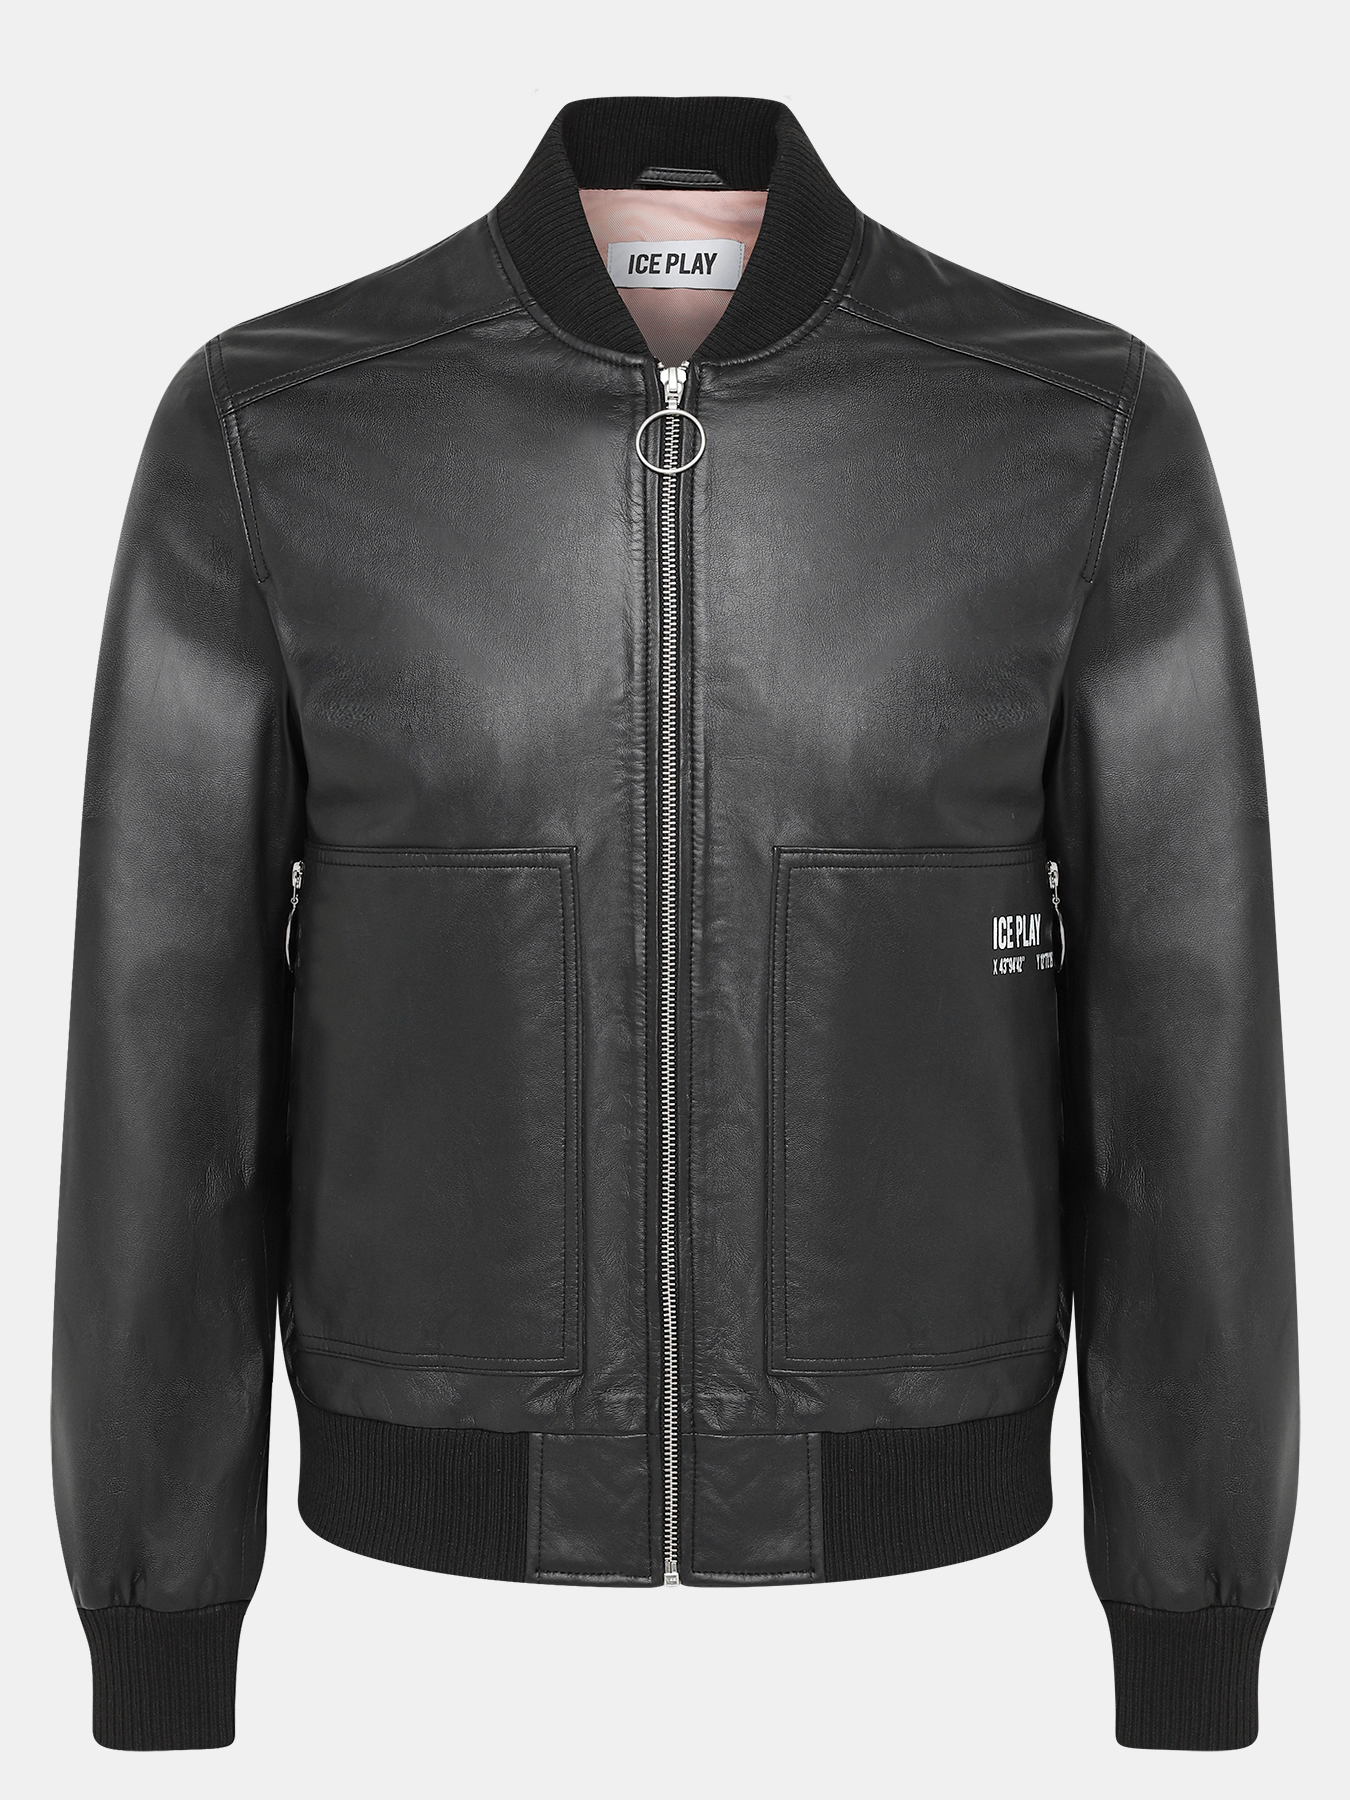 Кожаная куртка Ice Play 407198-027, цвет черный, размер 52